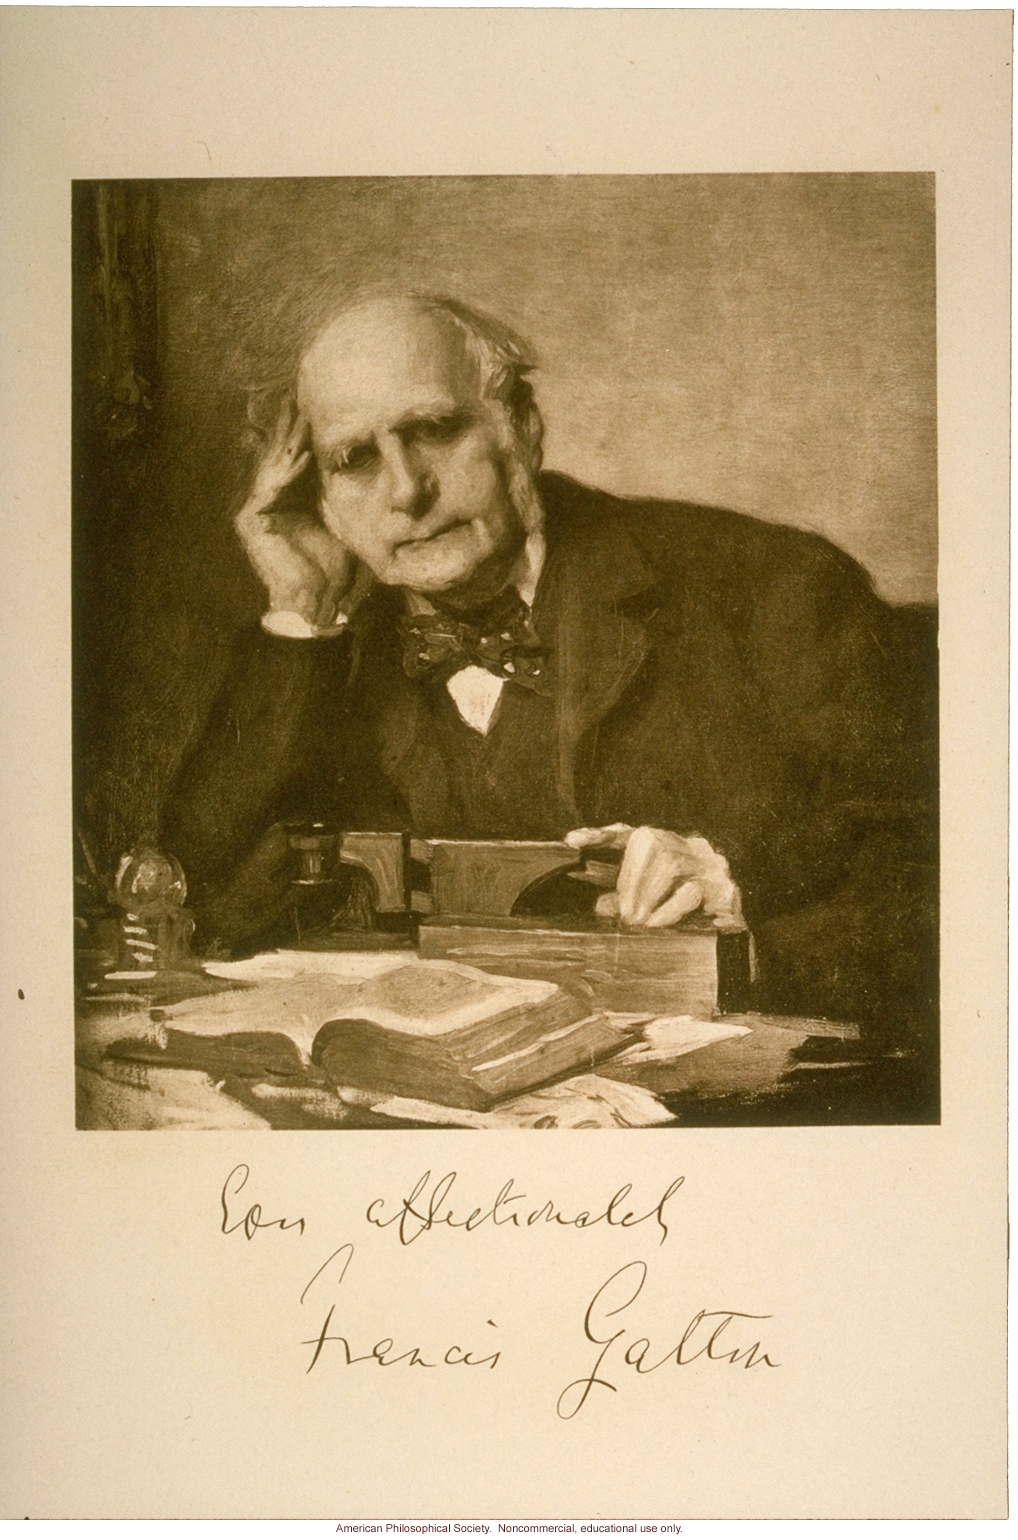 Francis Galton, portrait by Charles Wellington Furse, signed by Galton 